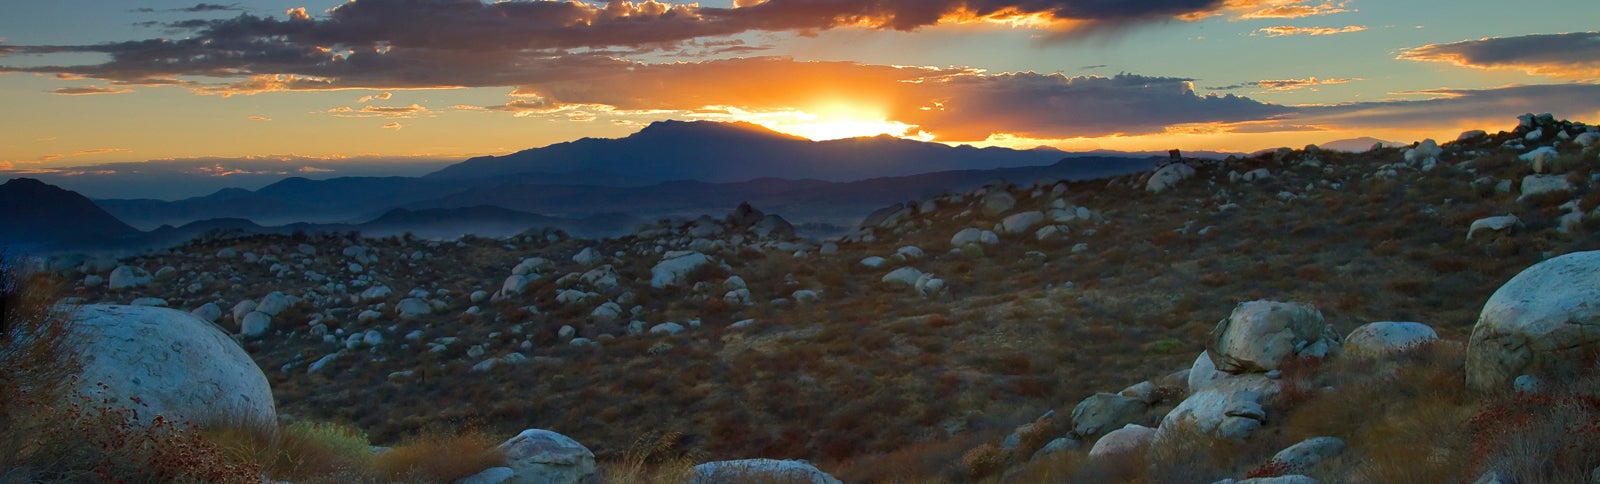 mountains and sunset (c) Drew Hays 206414 unsplash